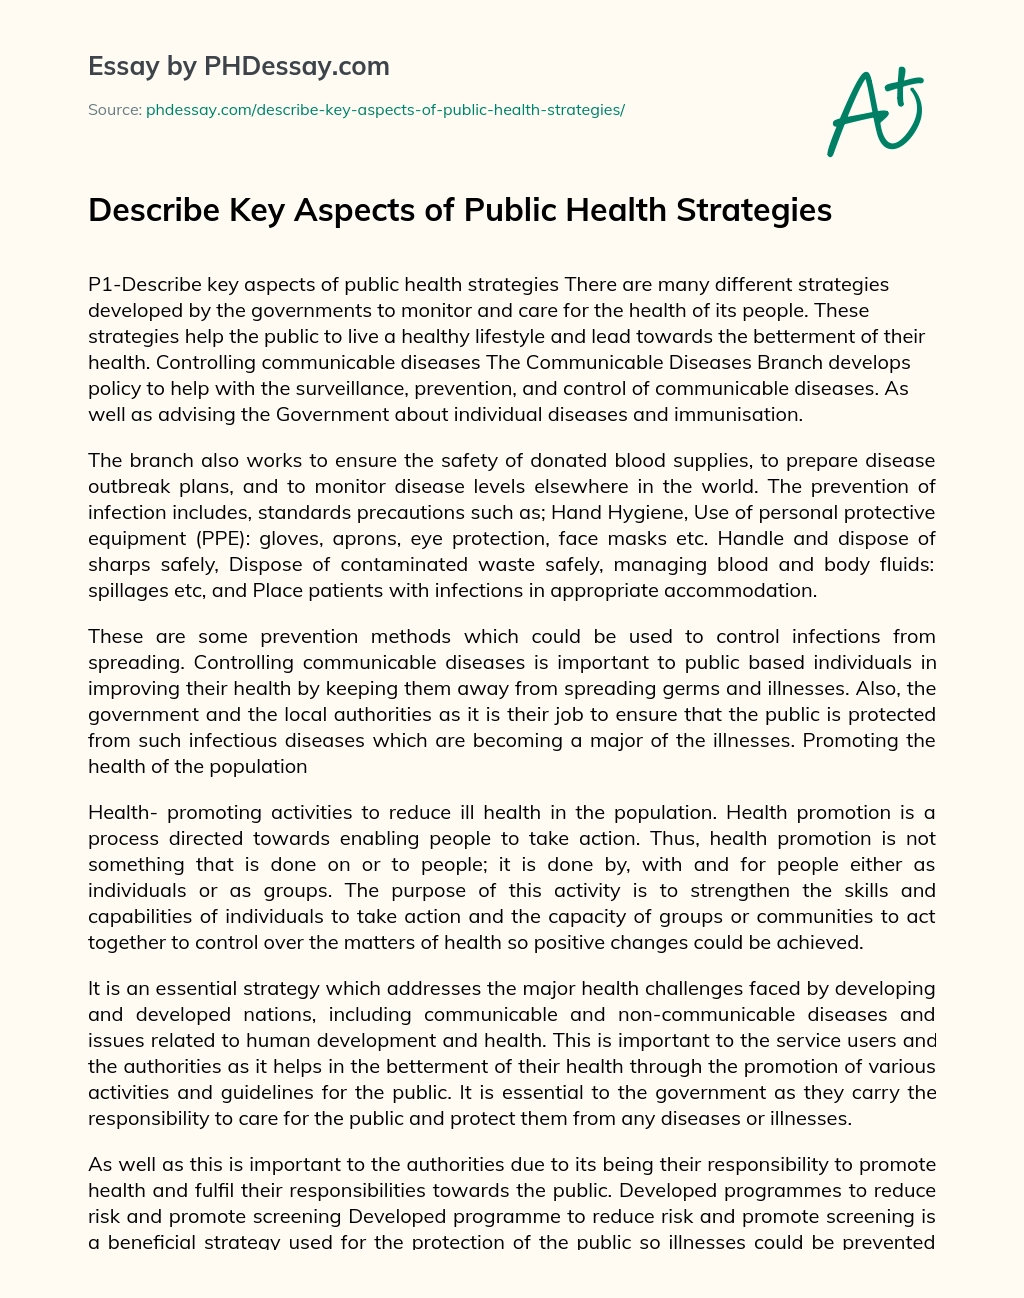 Describe Key Aspects of Public Health Strategies essay